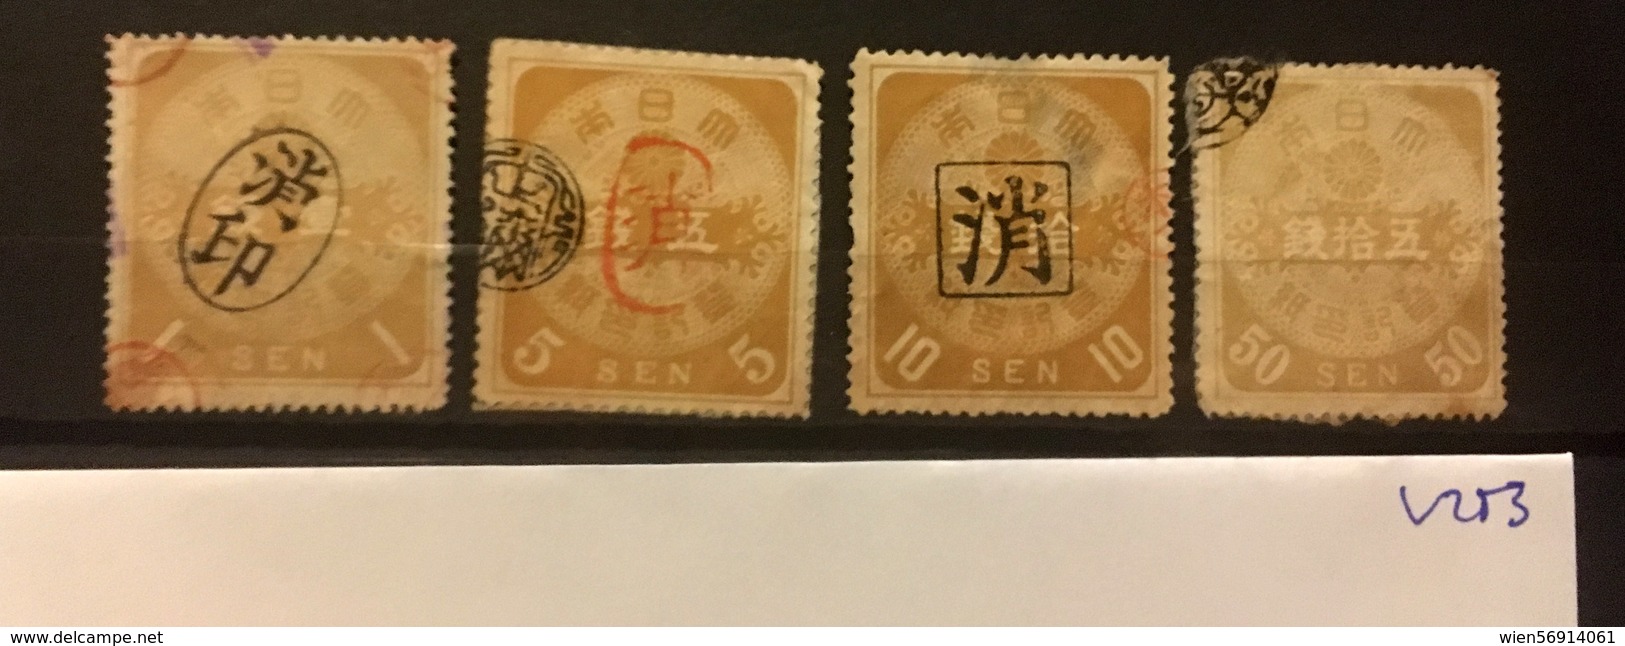 V253 Japan Collection High CV - Telegraphenmarken